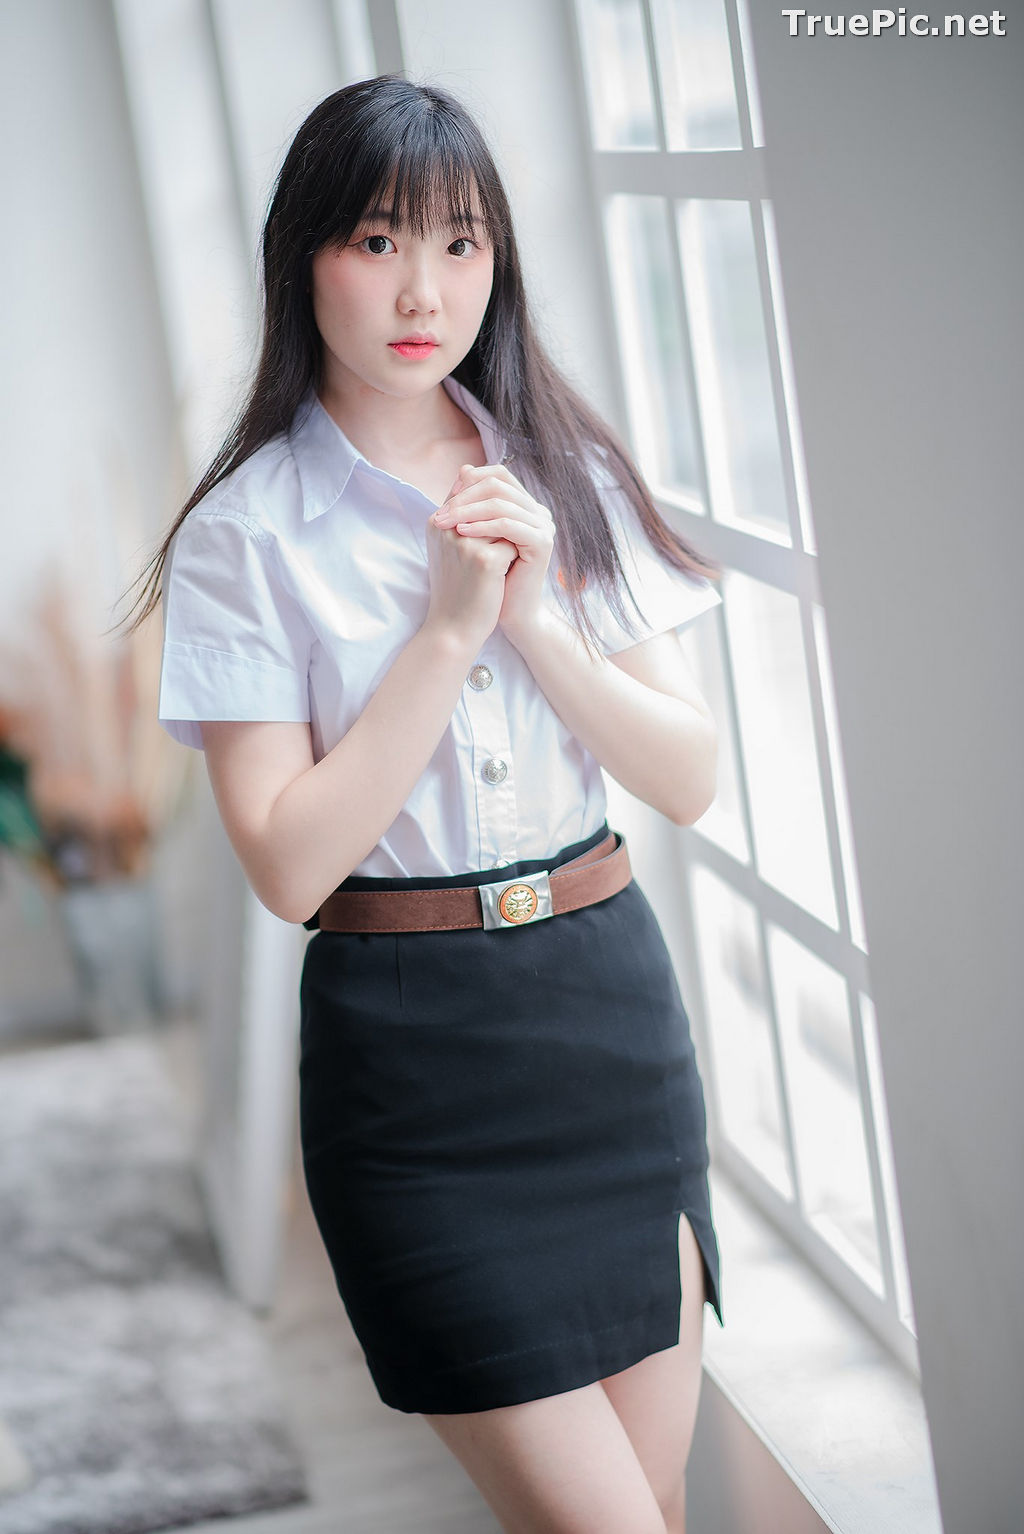 Image Thailand Model - Miki Ariyathanakit - Cute Student Girl - TruePic.net - Picture-14